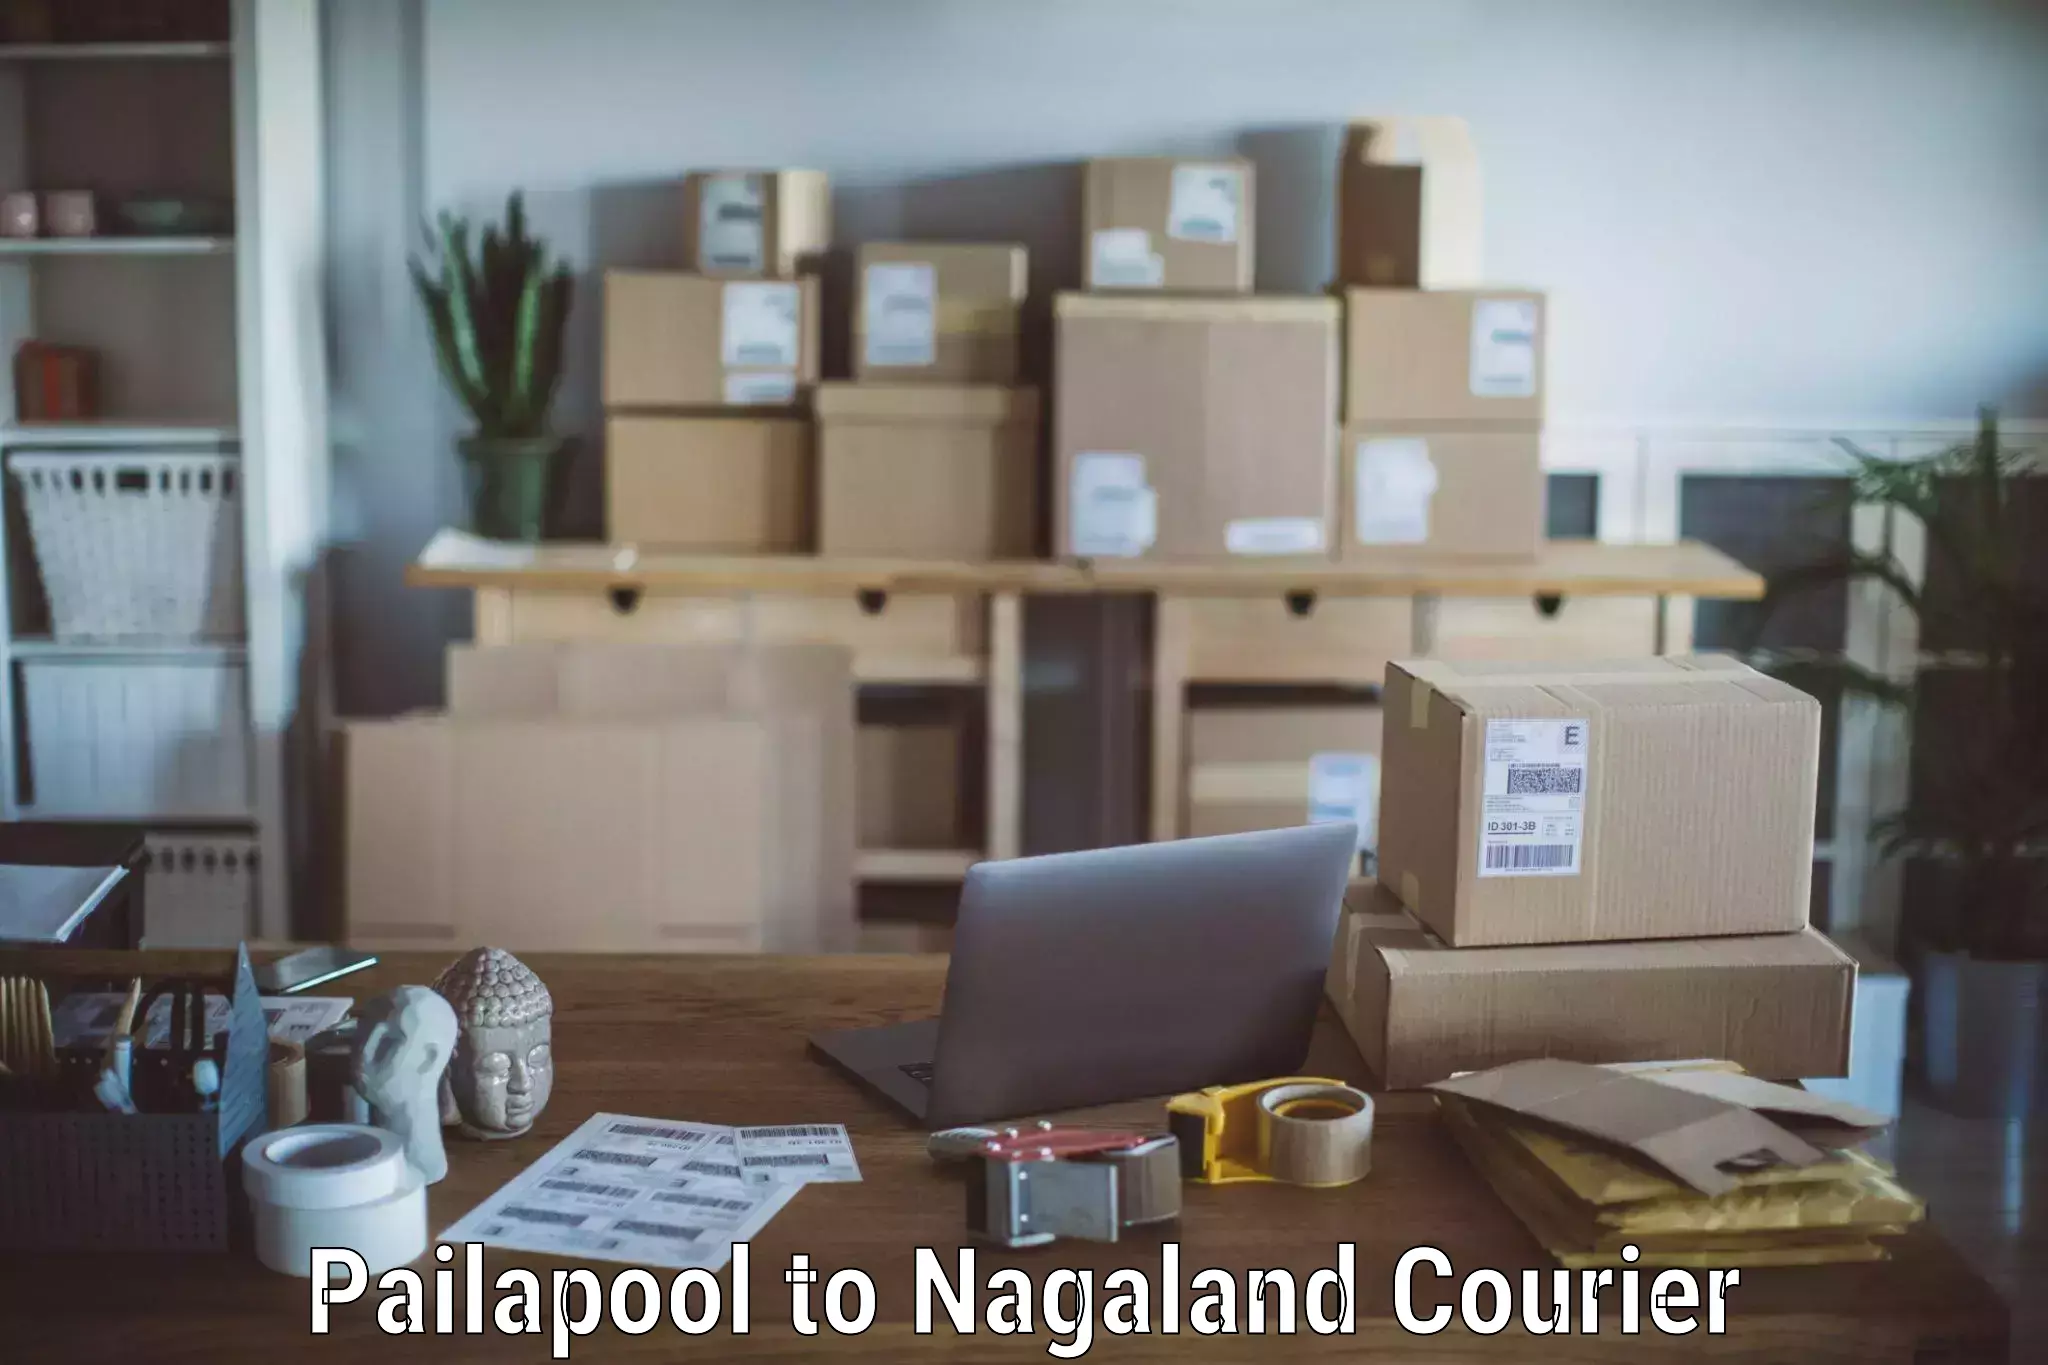 Professional moving company Pailapool to Nagaland